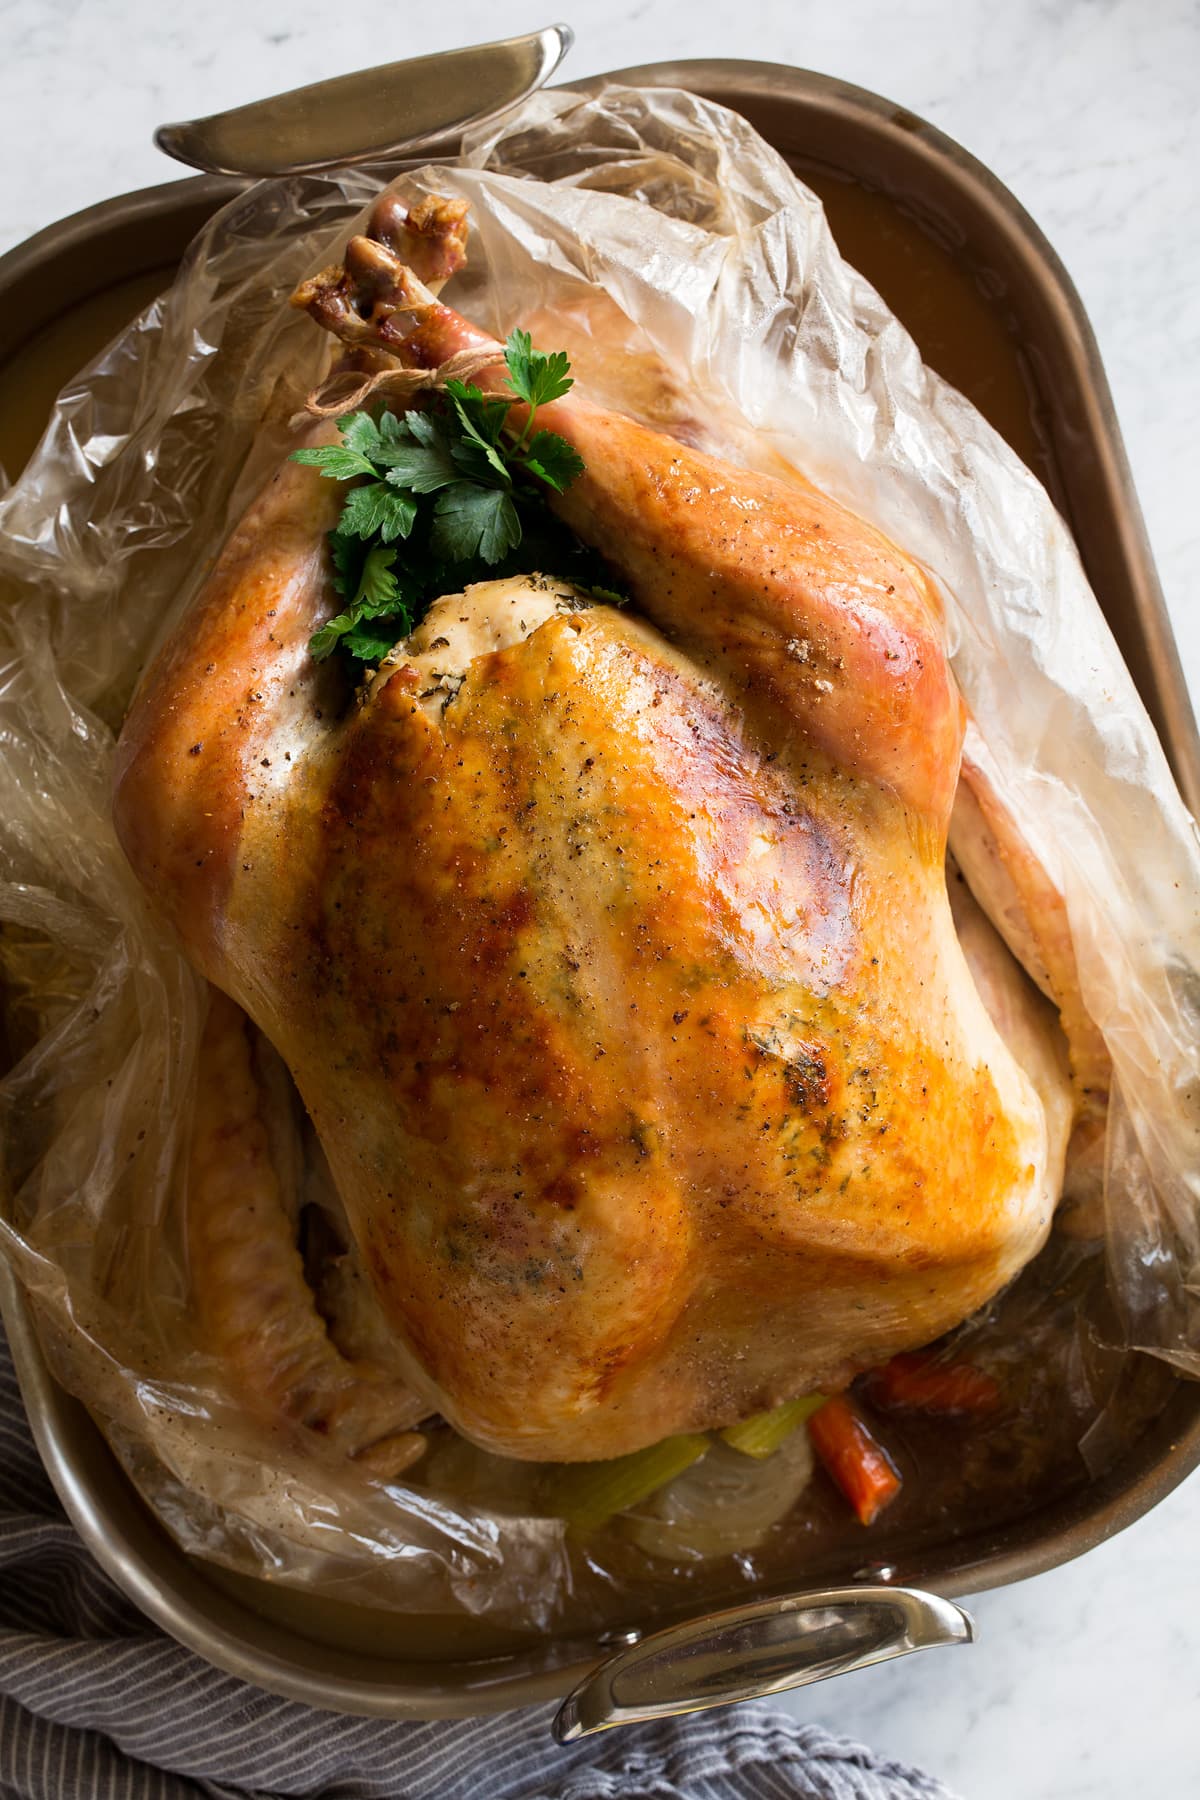 https://www.cookingclassy.com/wp-content/uploads/2019/11/oven-bag-turkey-8.jpg